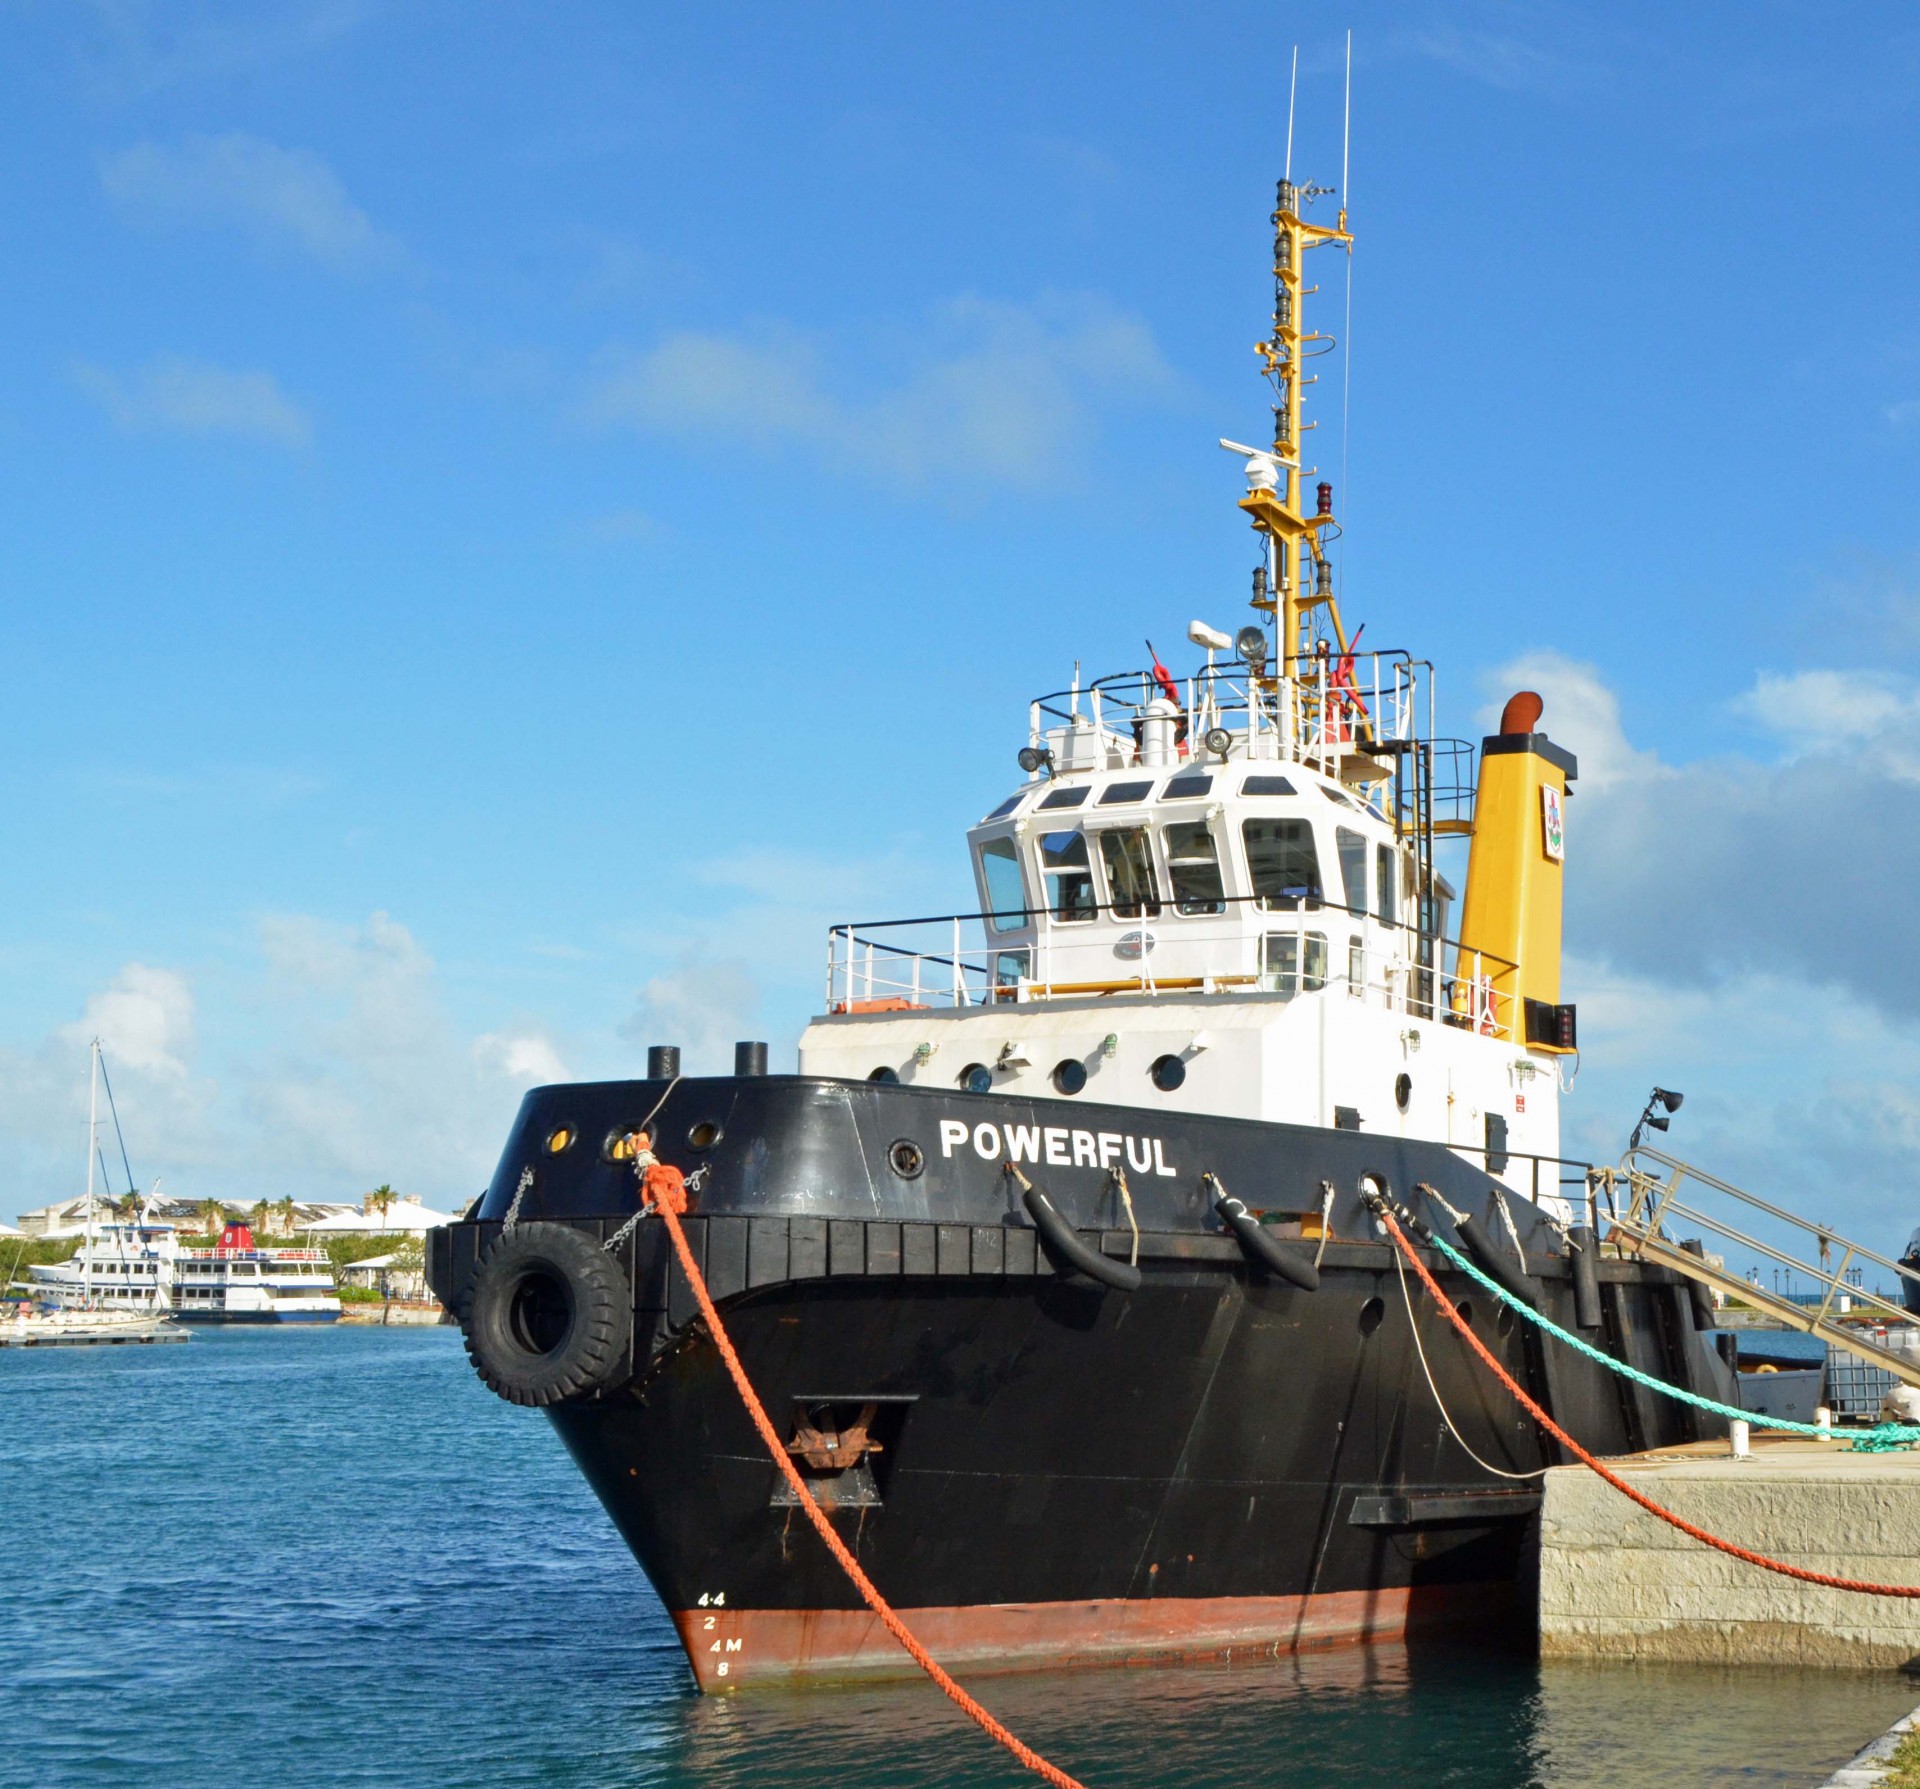 Powerful Tug at Royal Naval Dockyard